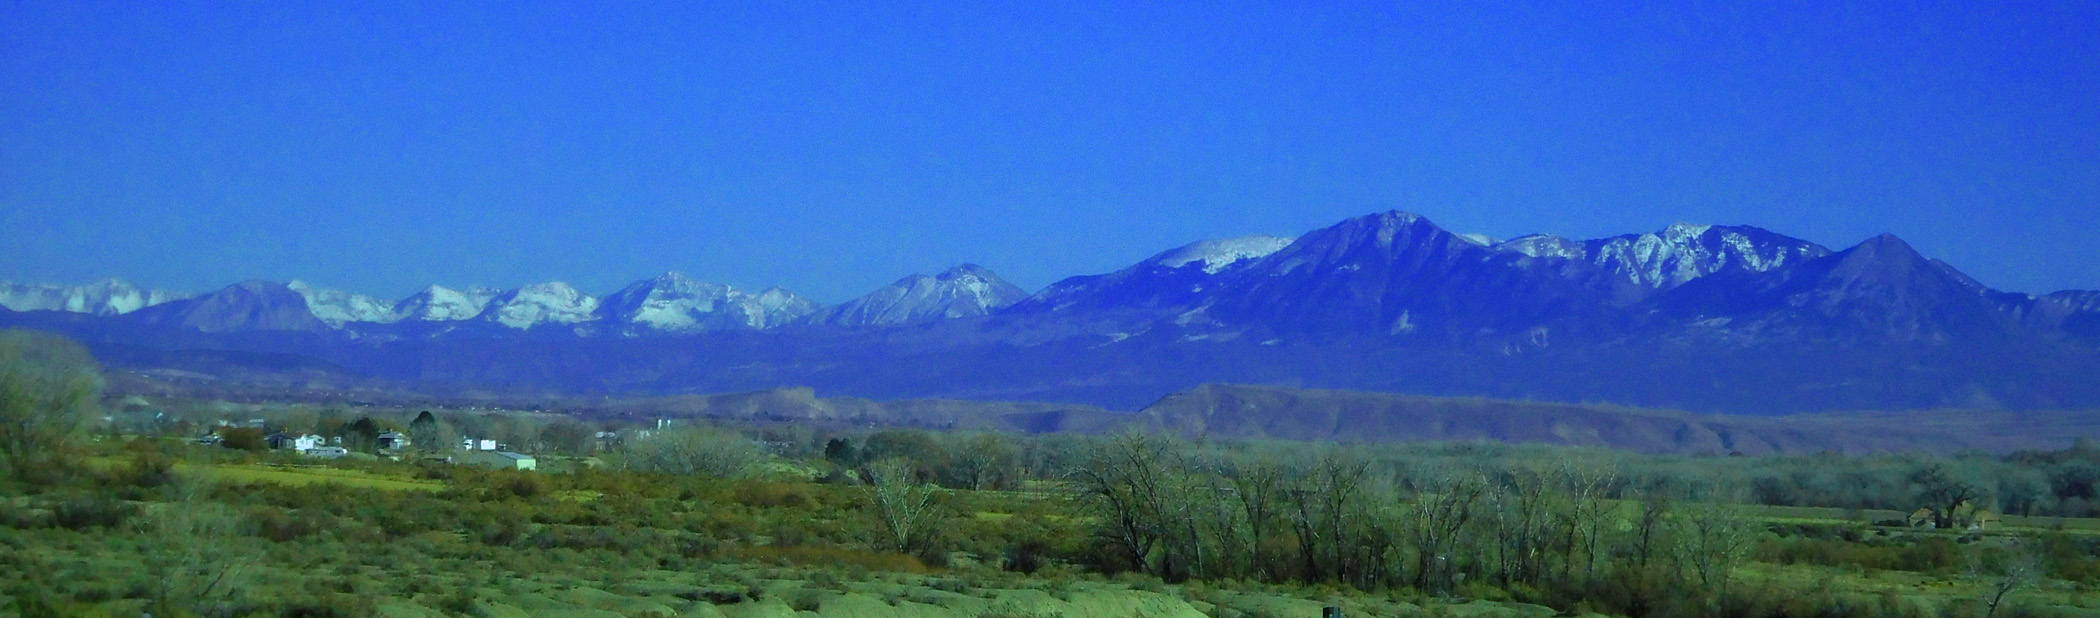 West Elk Mountains